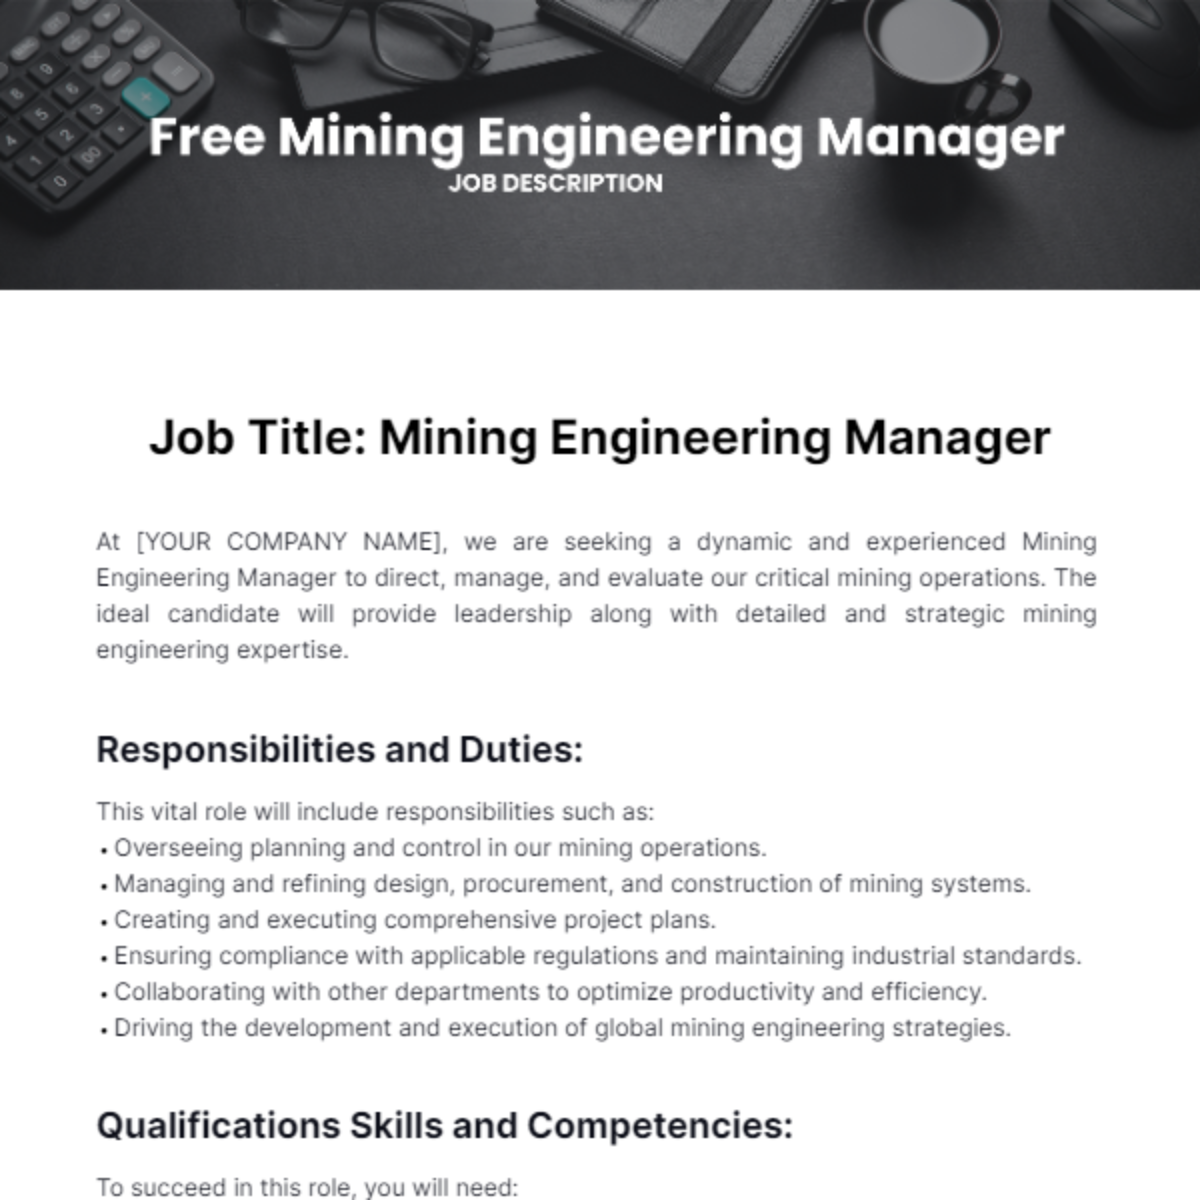 Mining Engineering Manager Job Description Template